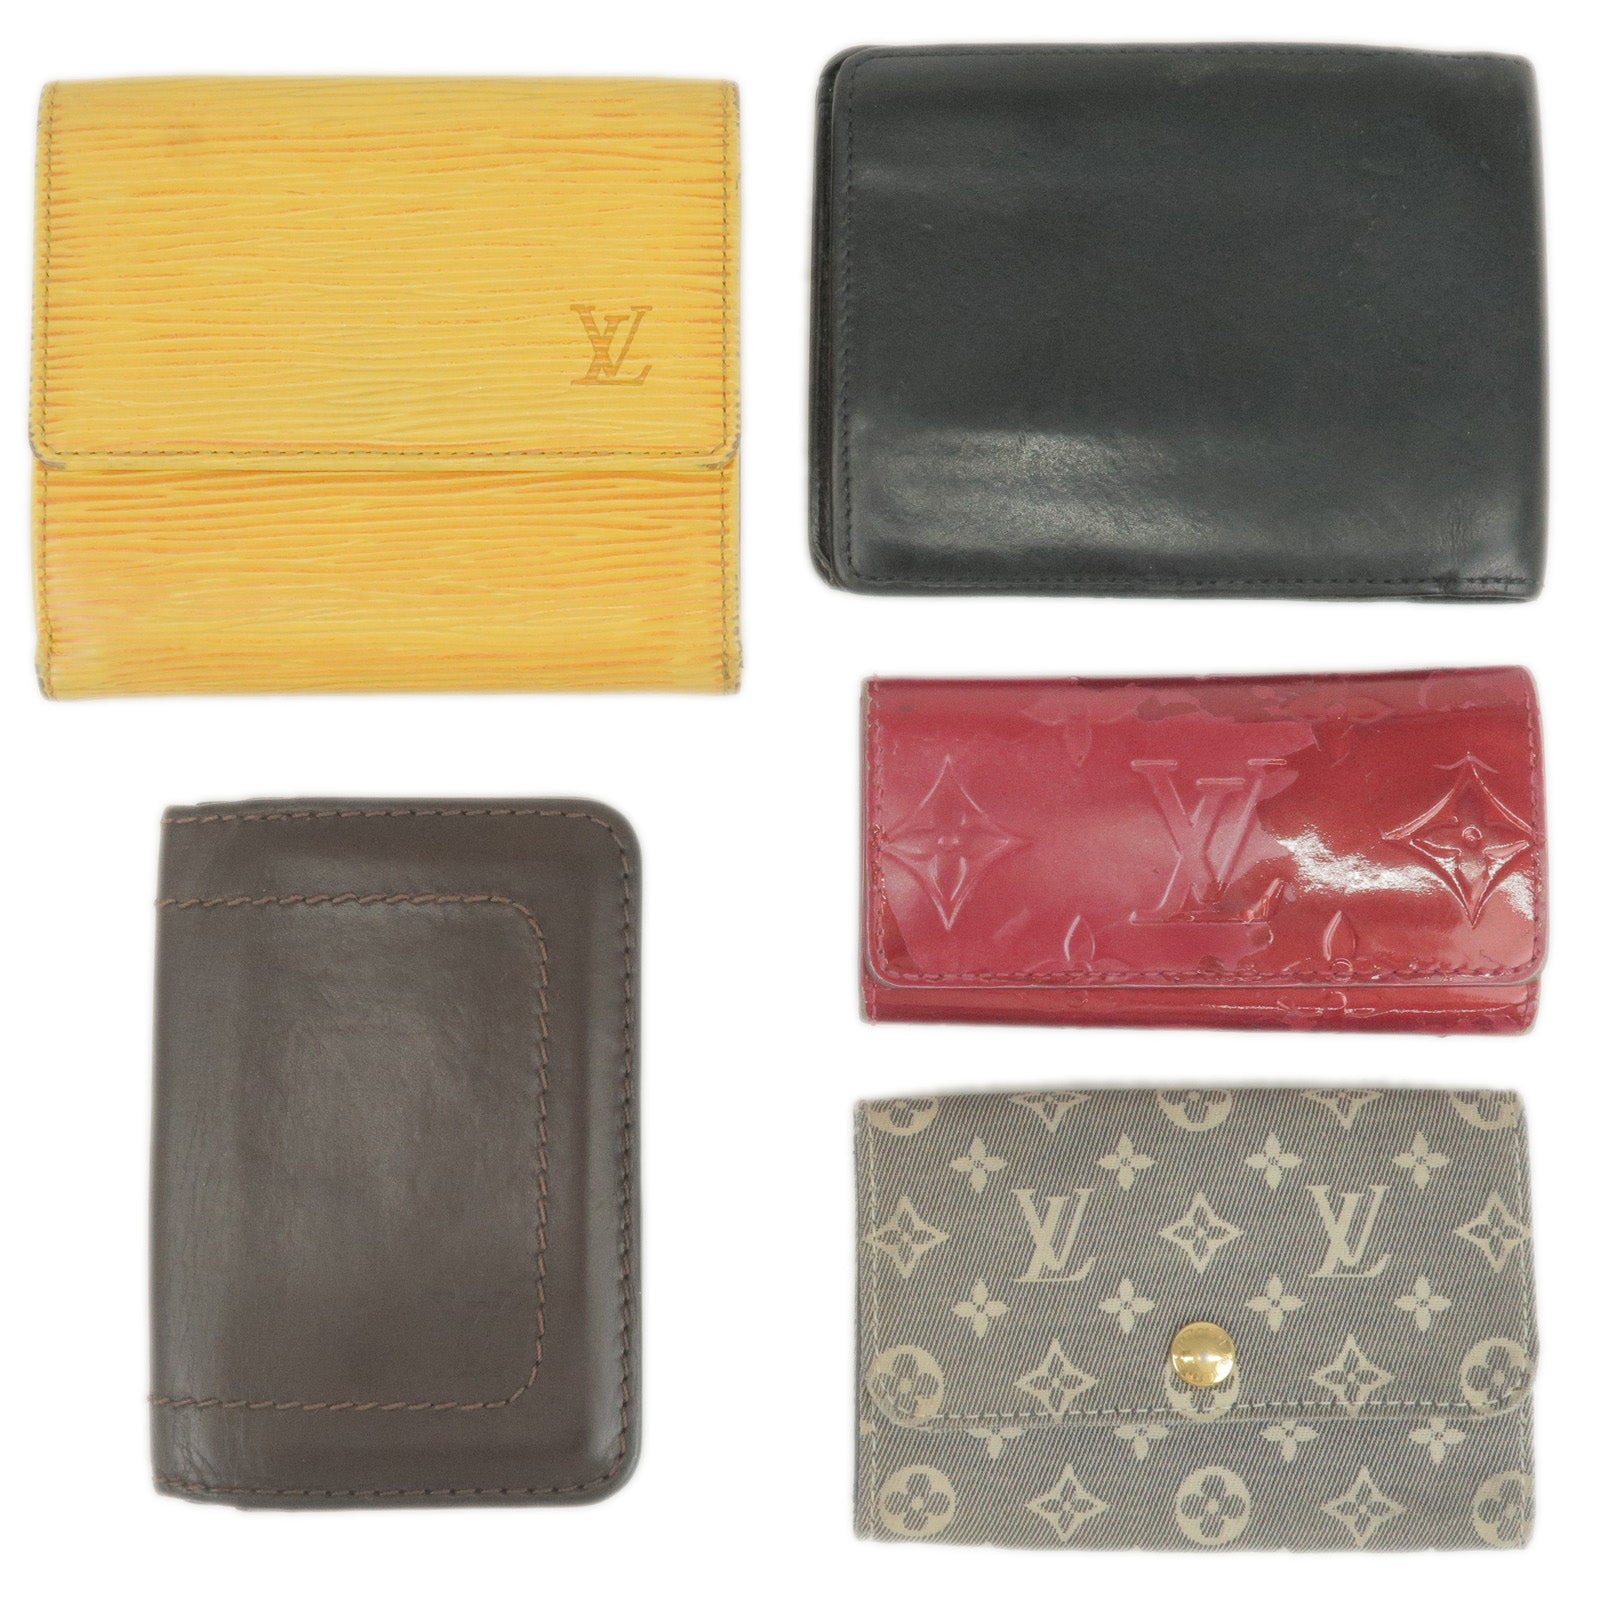 small lv key wallet